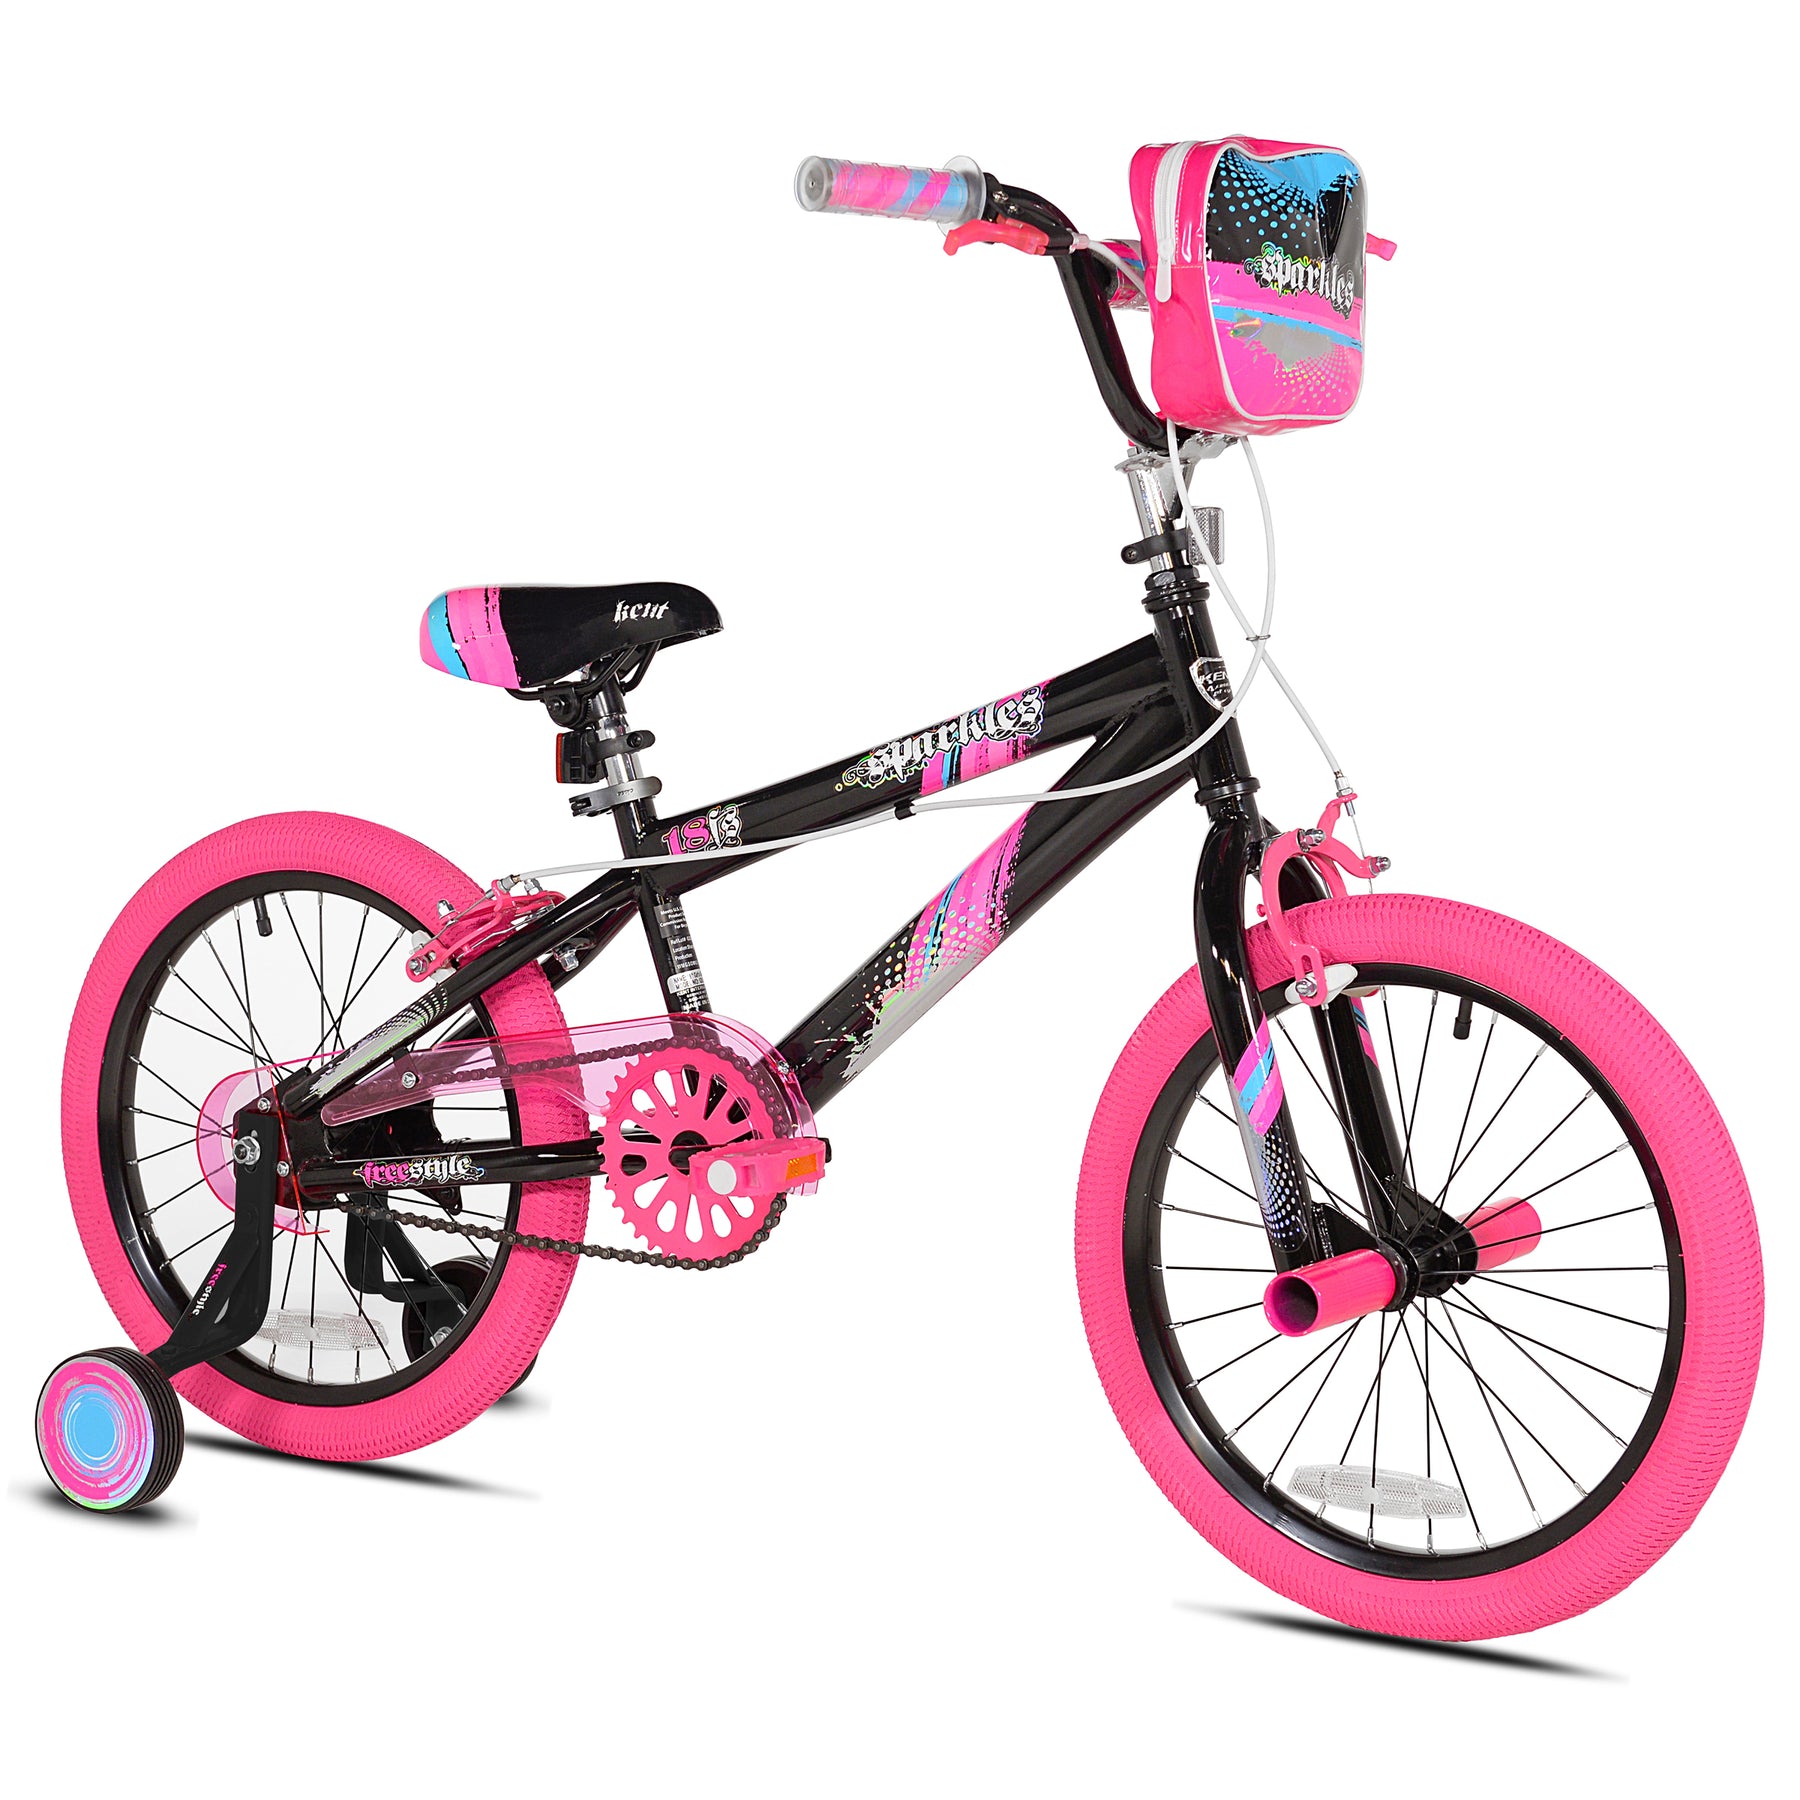 18" Kent Sparkles | BMX Bike for Kids Ages 5-8